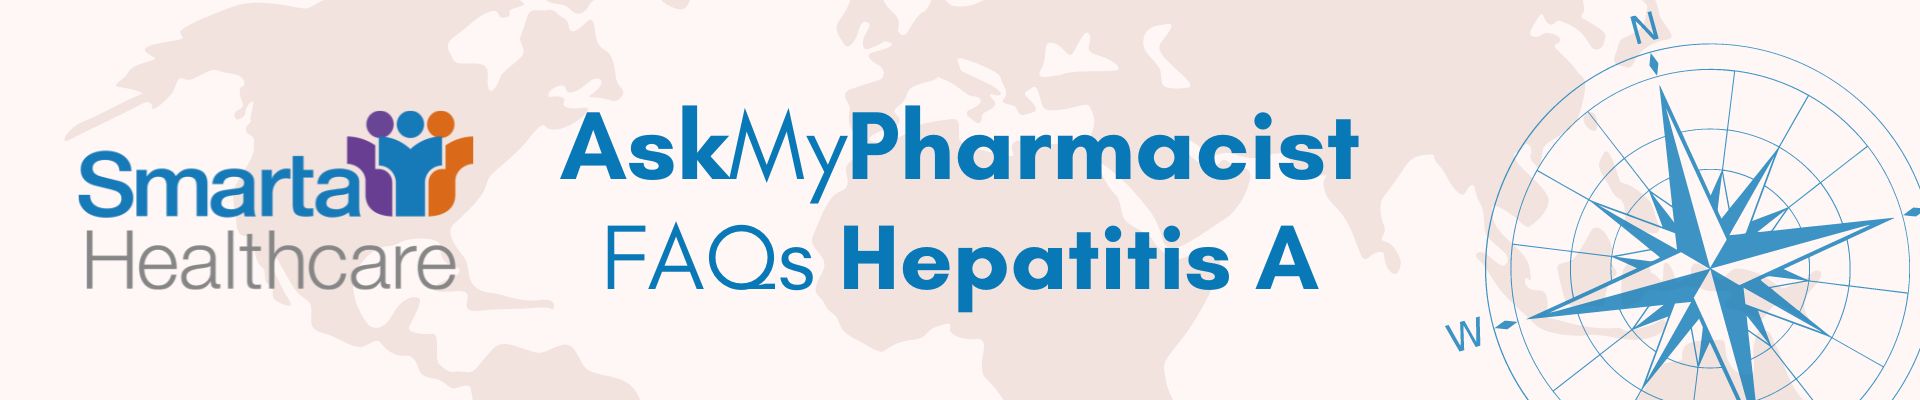 Smarta Healthcare AskMyPharmacist FAQs Hepatitis A